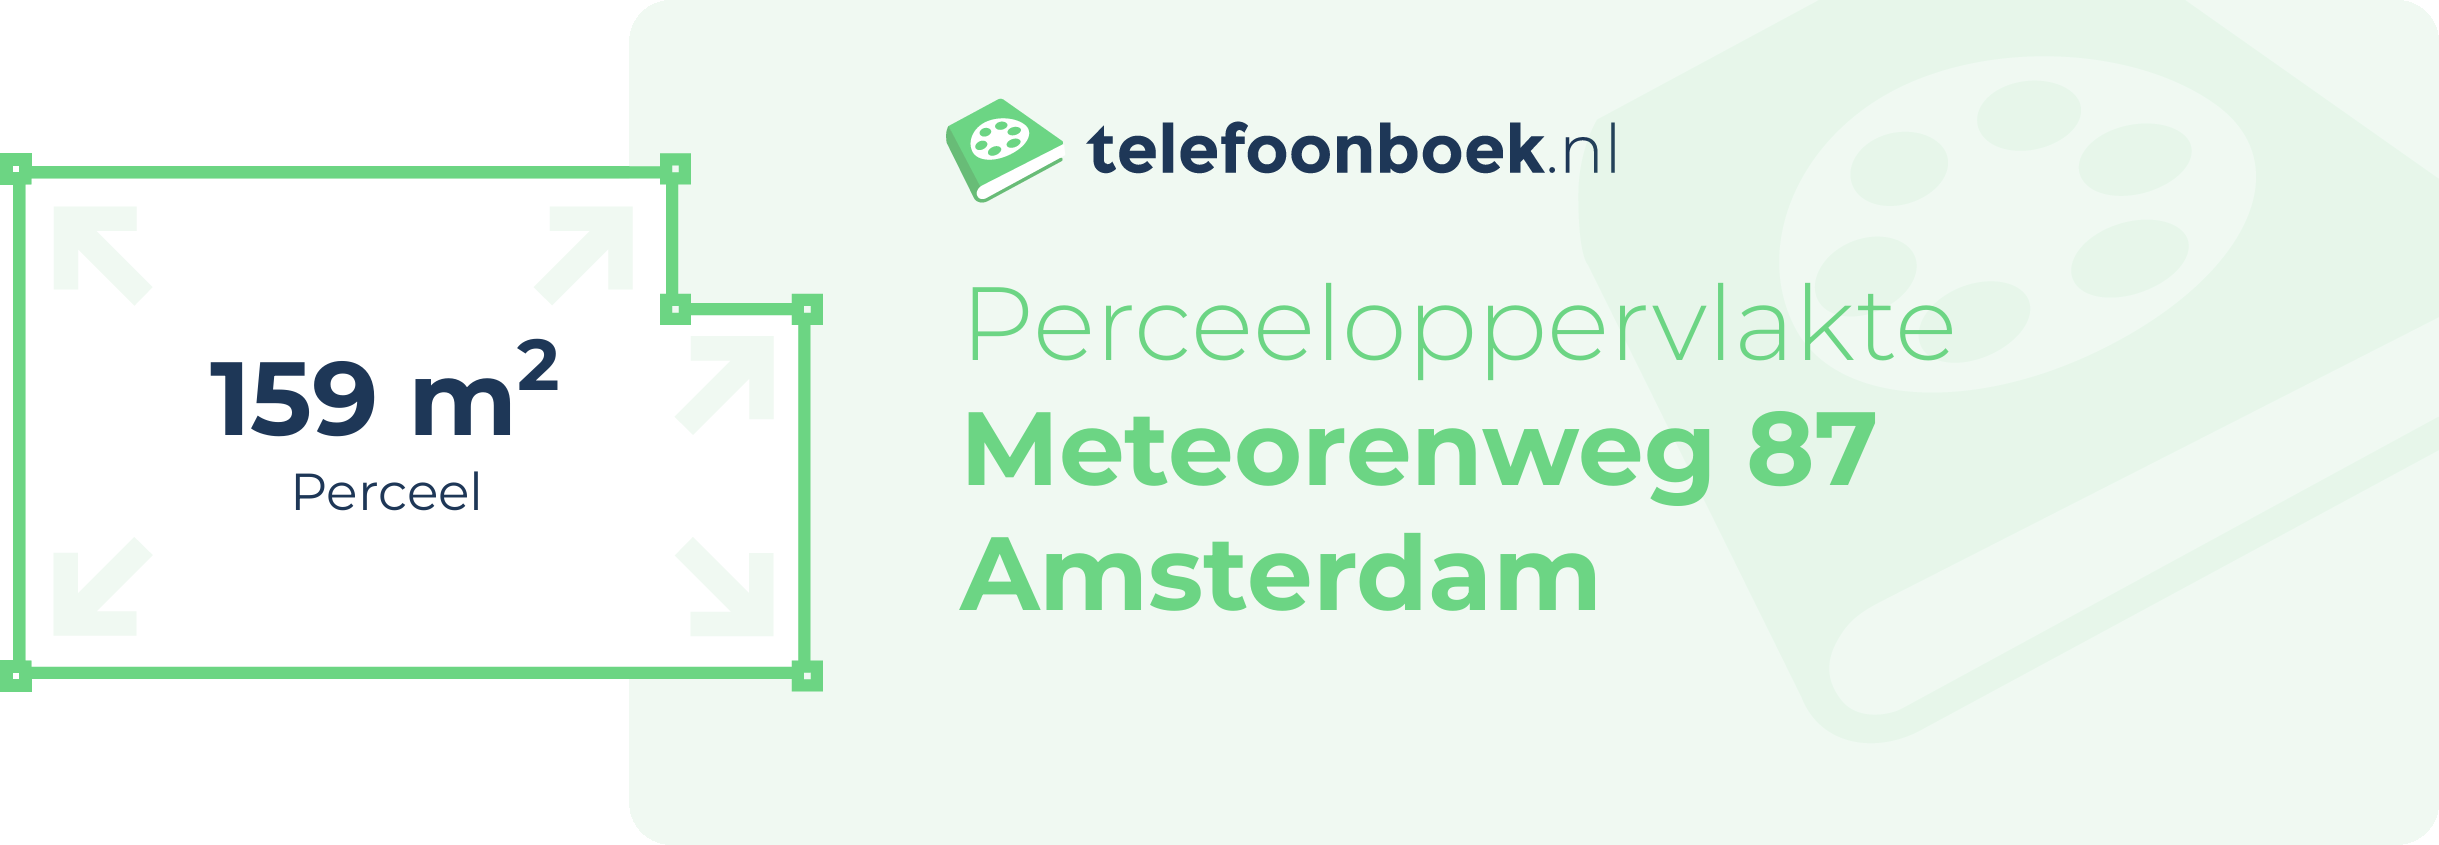 Perceeloppervlakte Meteorenweg 87 Amsterdam